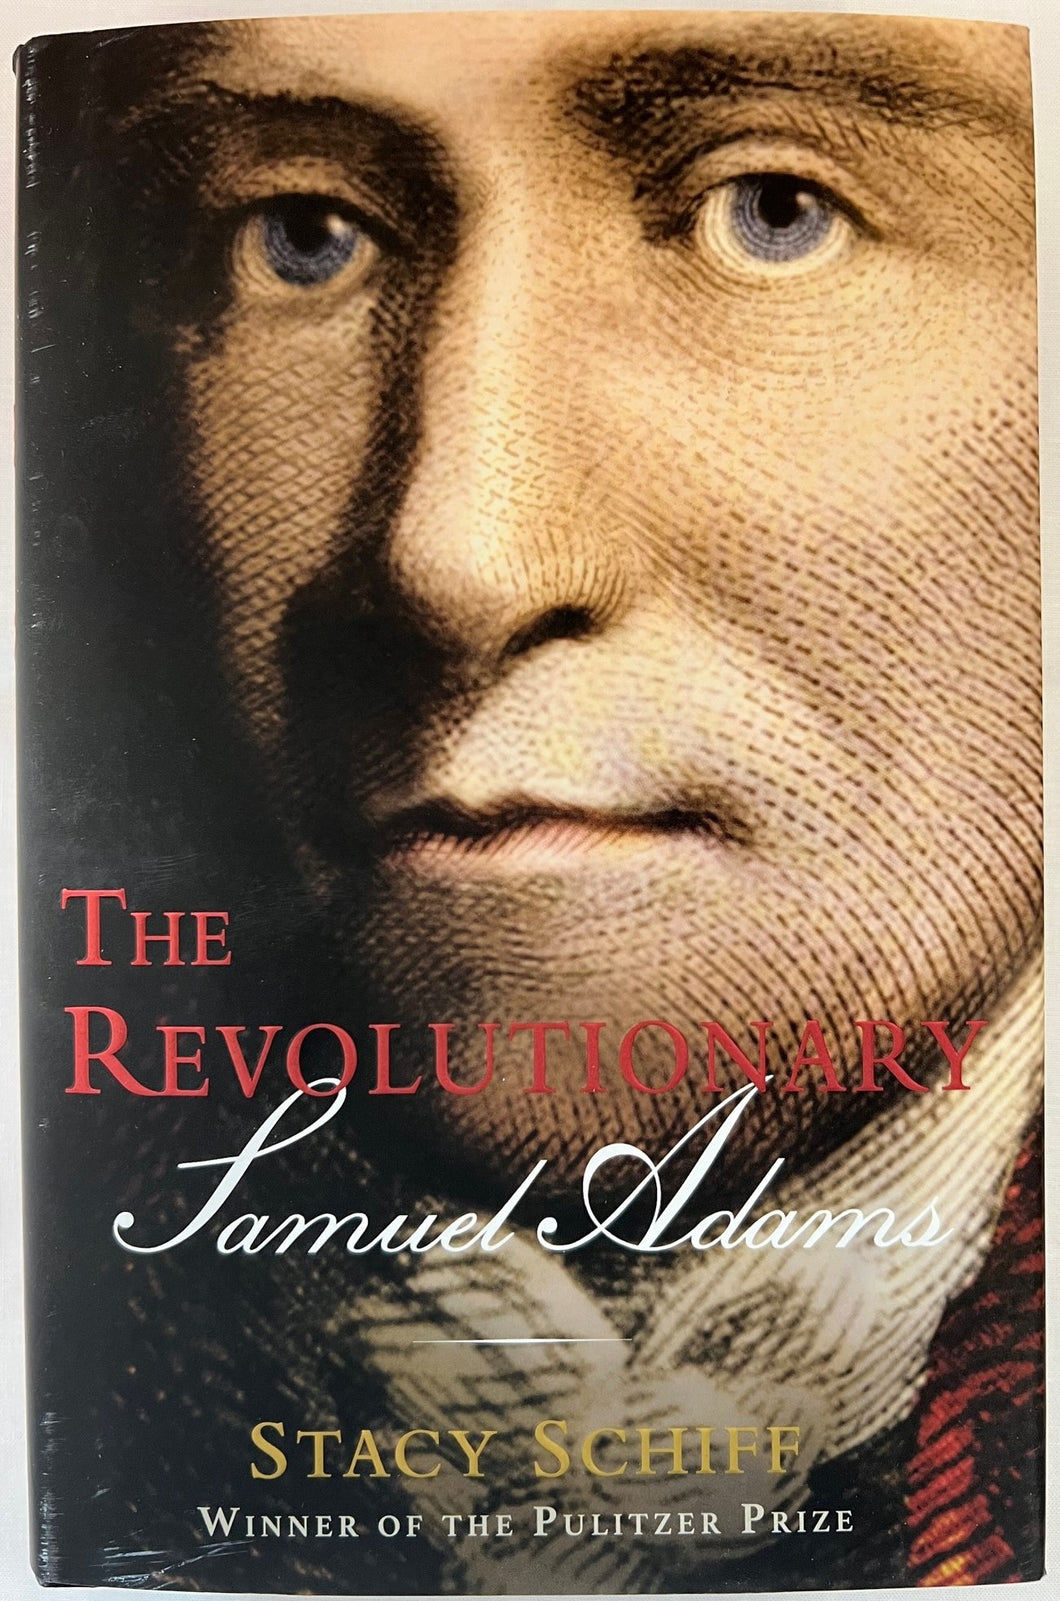 The Revolutionary Samuel Adams by Stacey Schiff